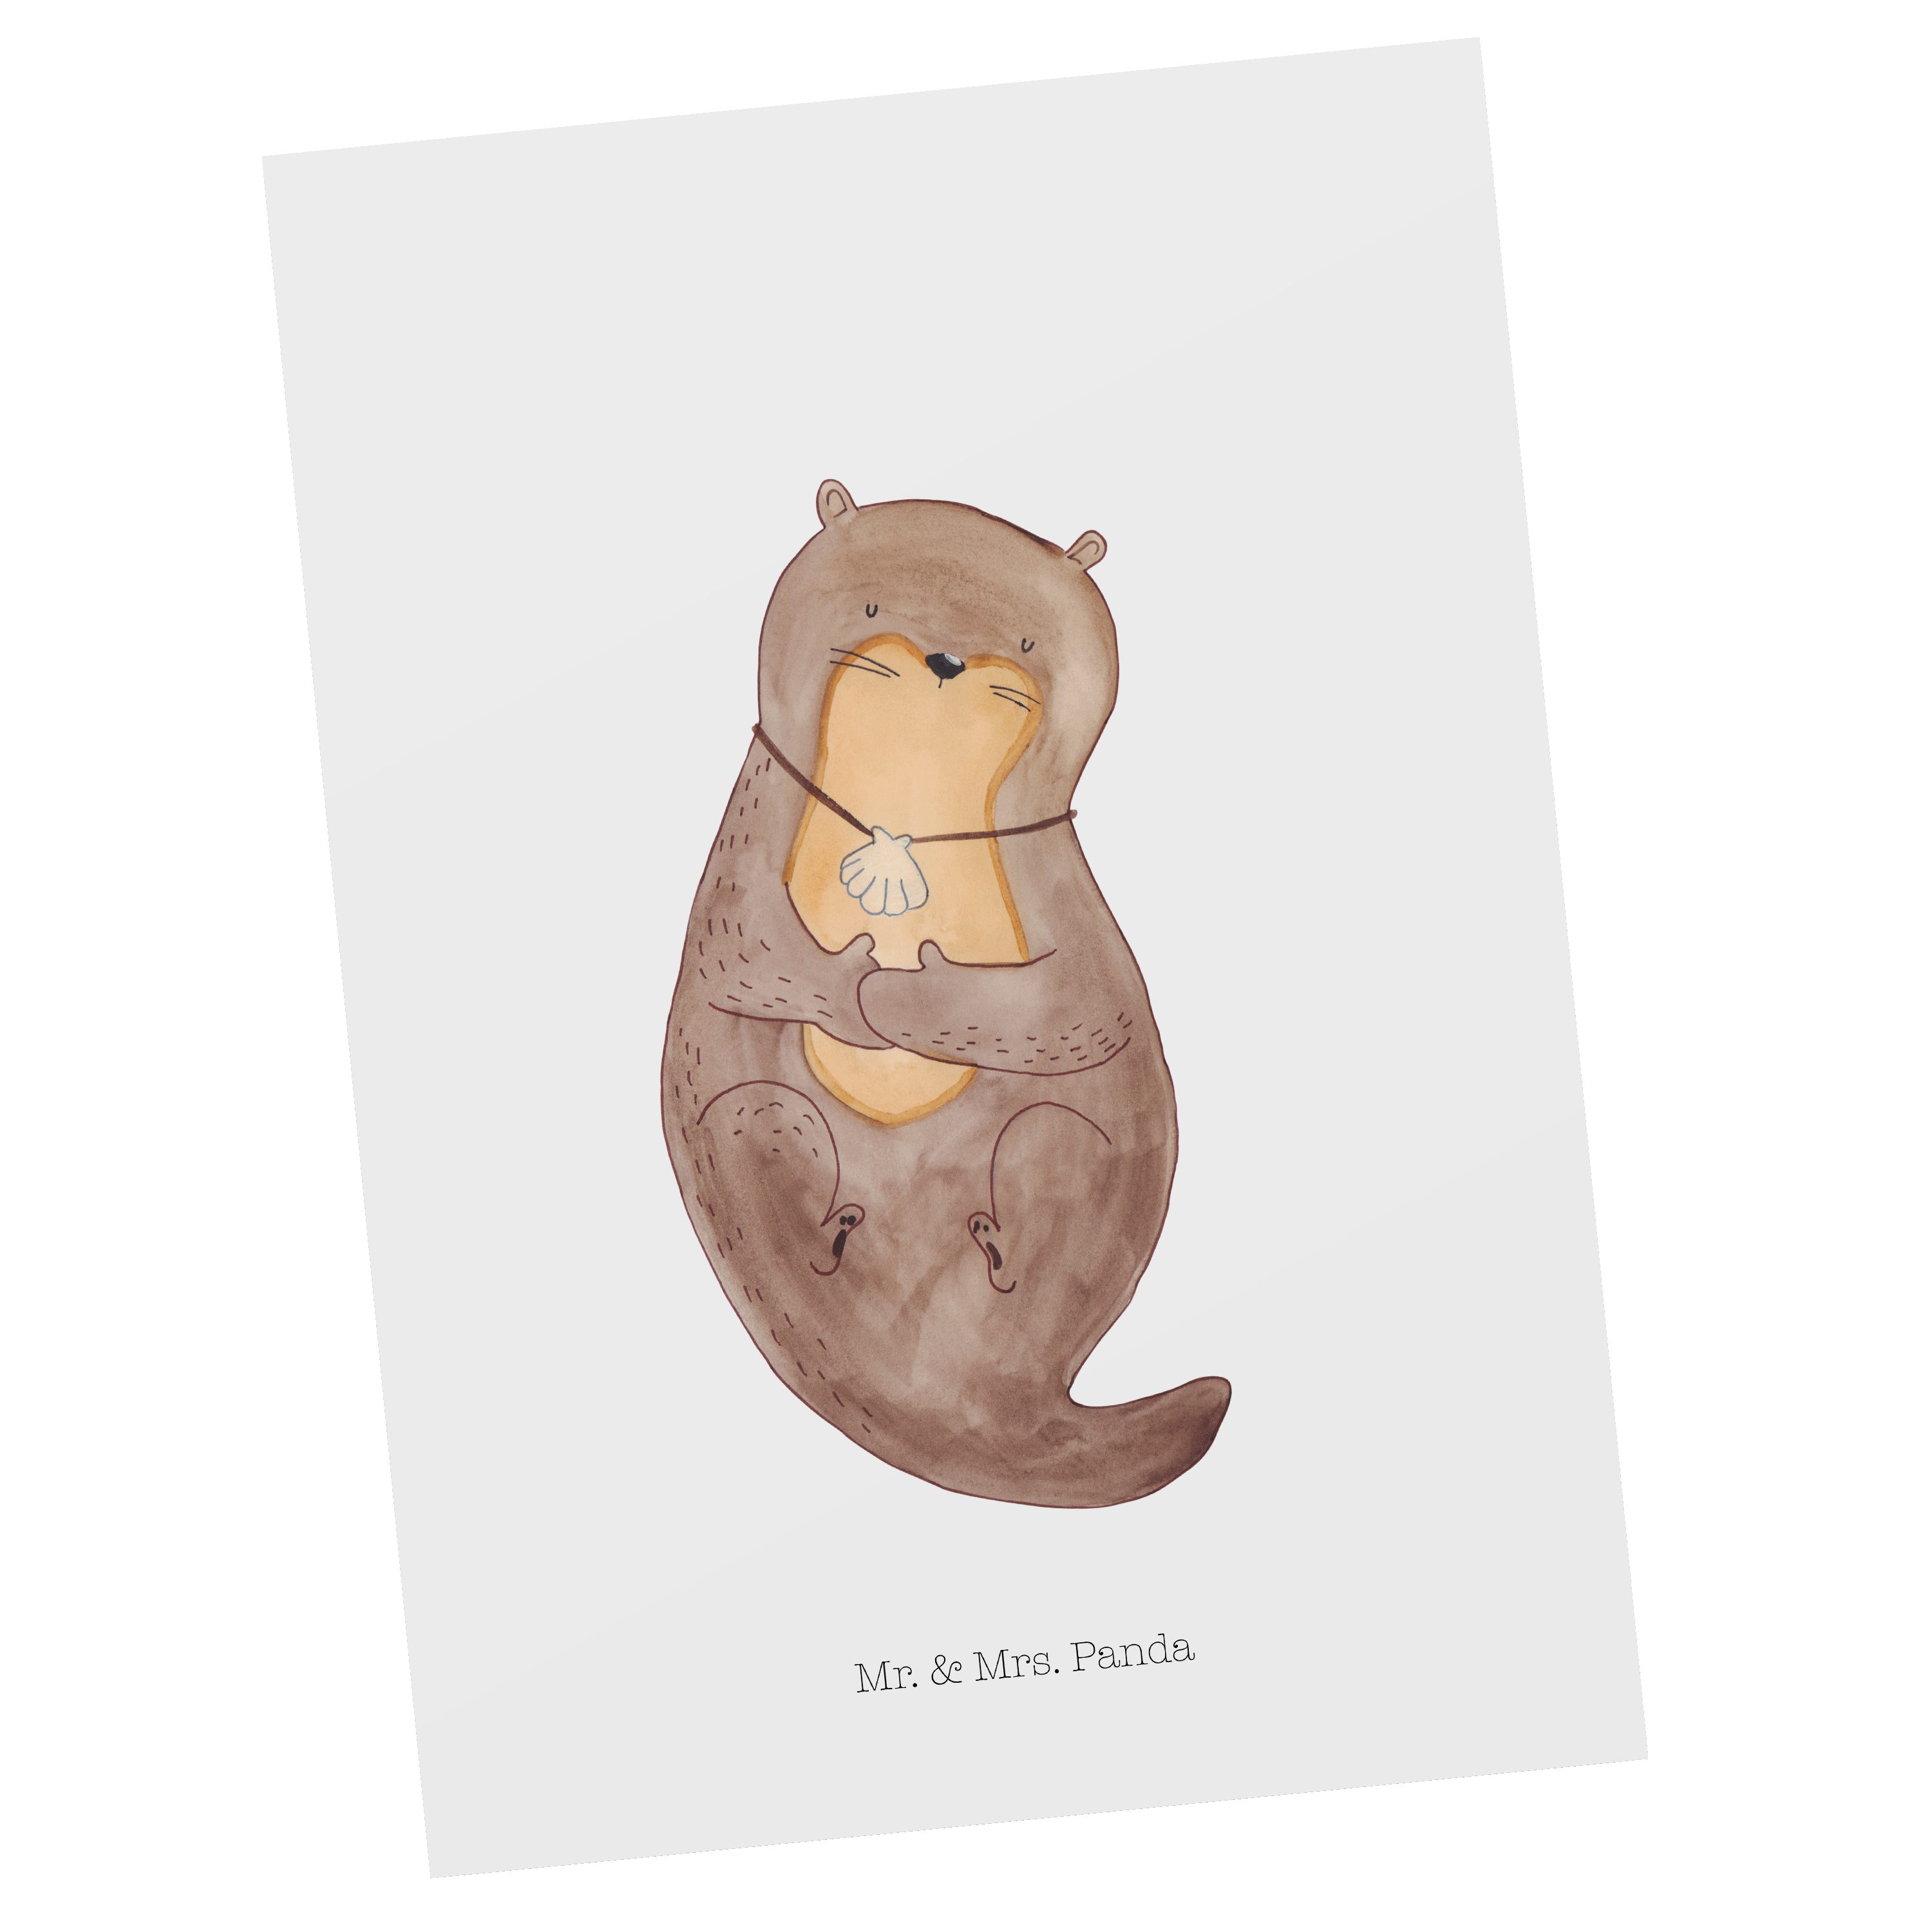 Mr. & Mrs. Panda Postkarte Otter mit Muschelmedaillon - Weiß - Geschenk, süß, Seeotter, Einladun